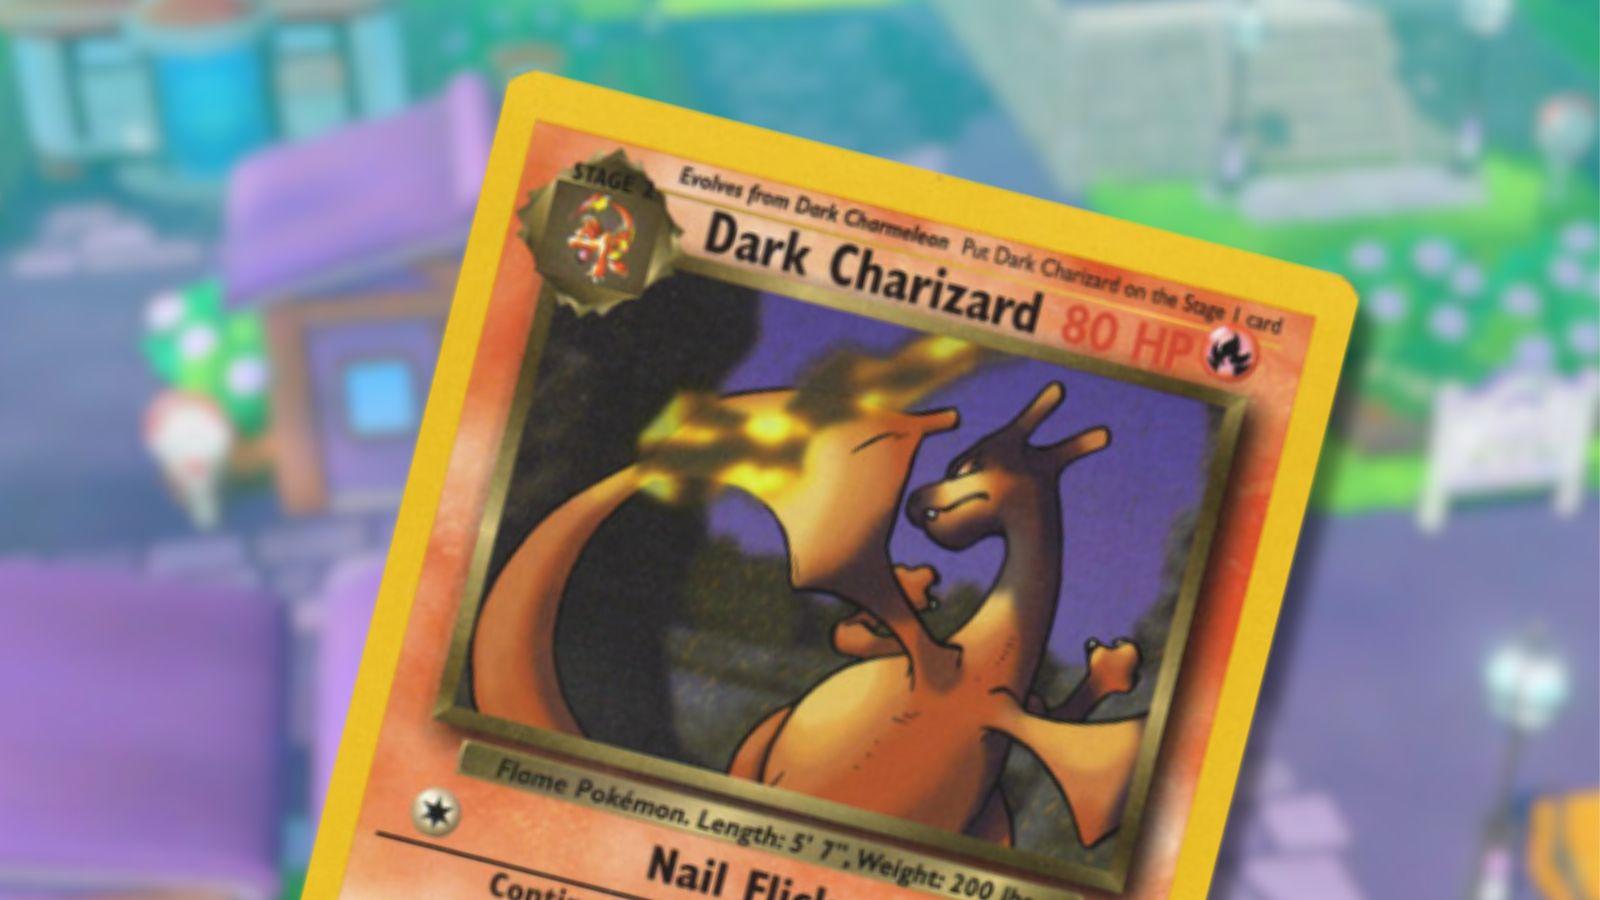 Dark Charizard Pokemon card with Lavender Town background.